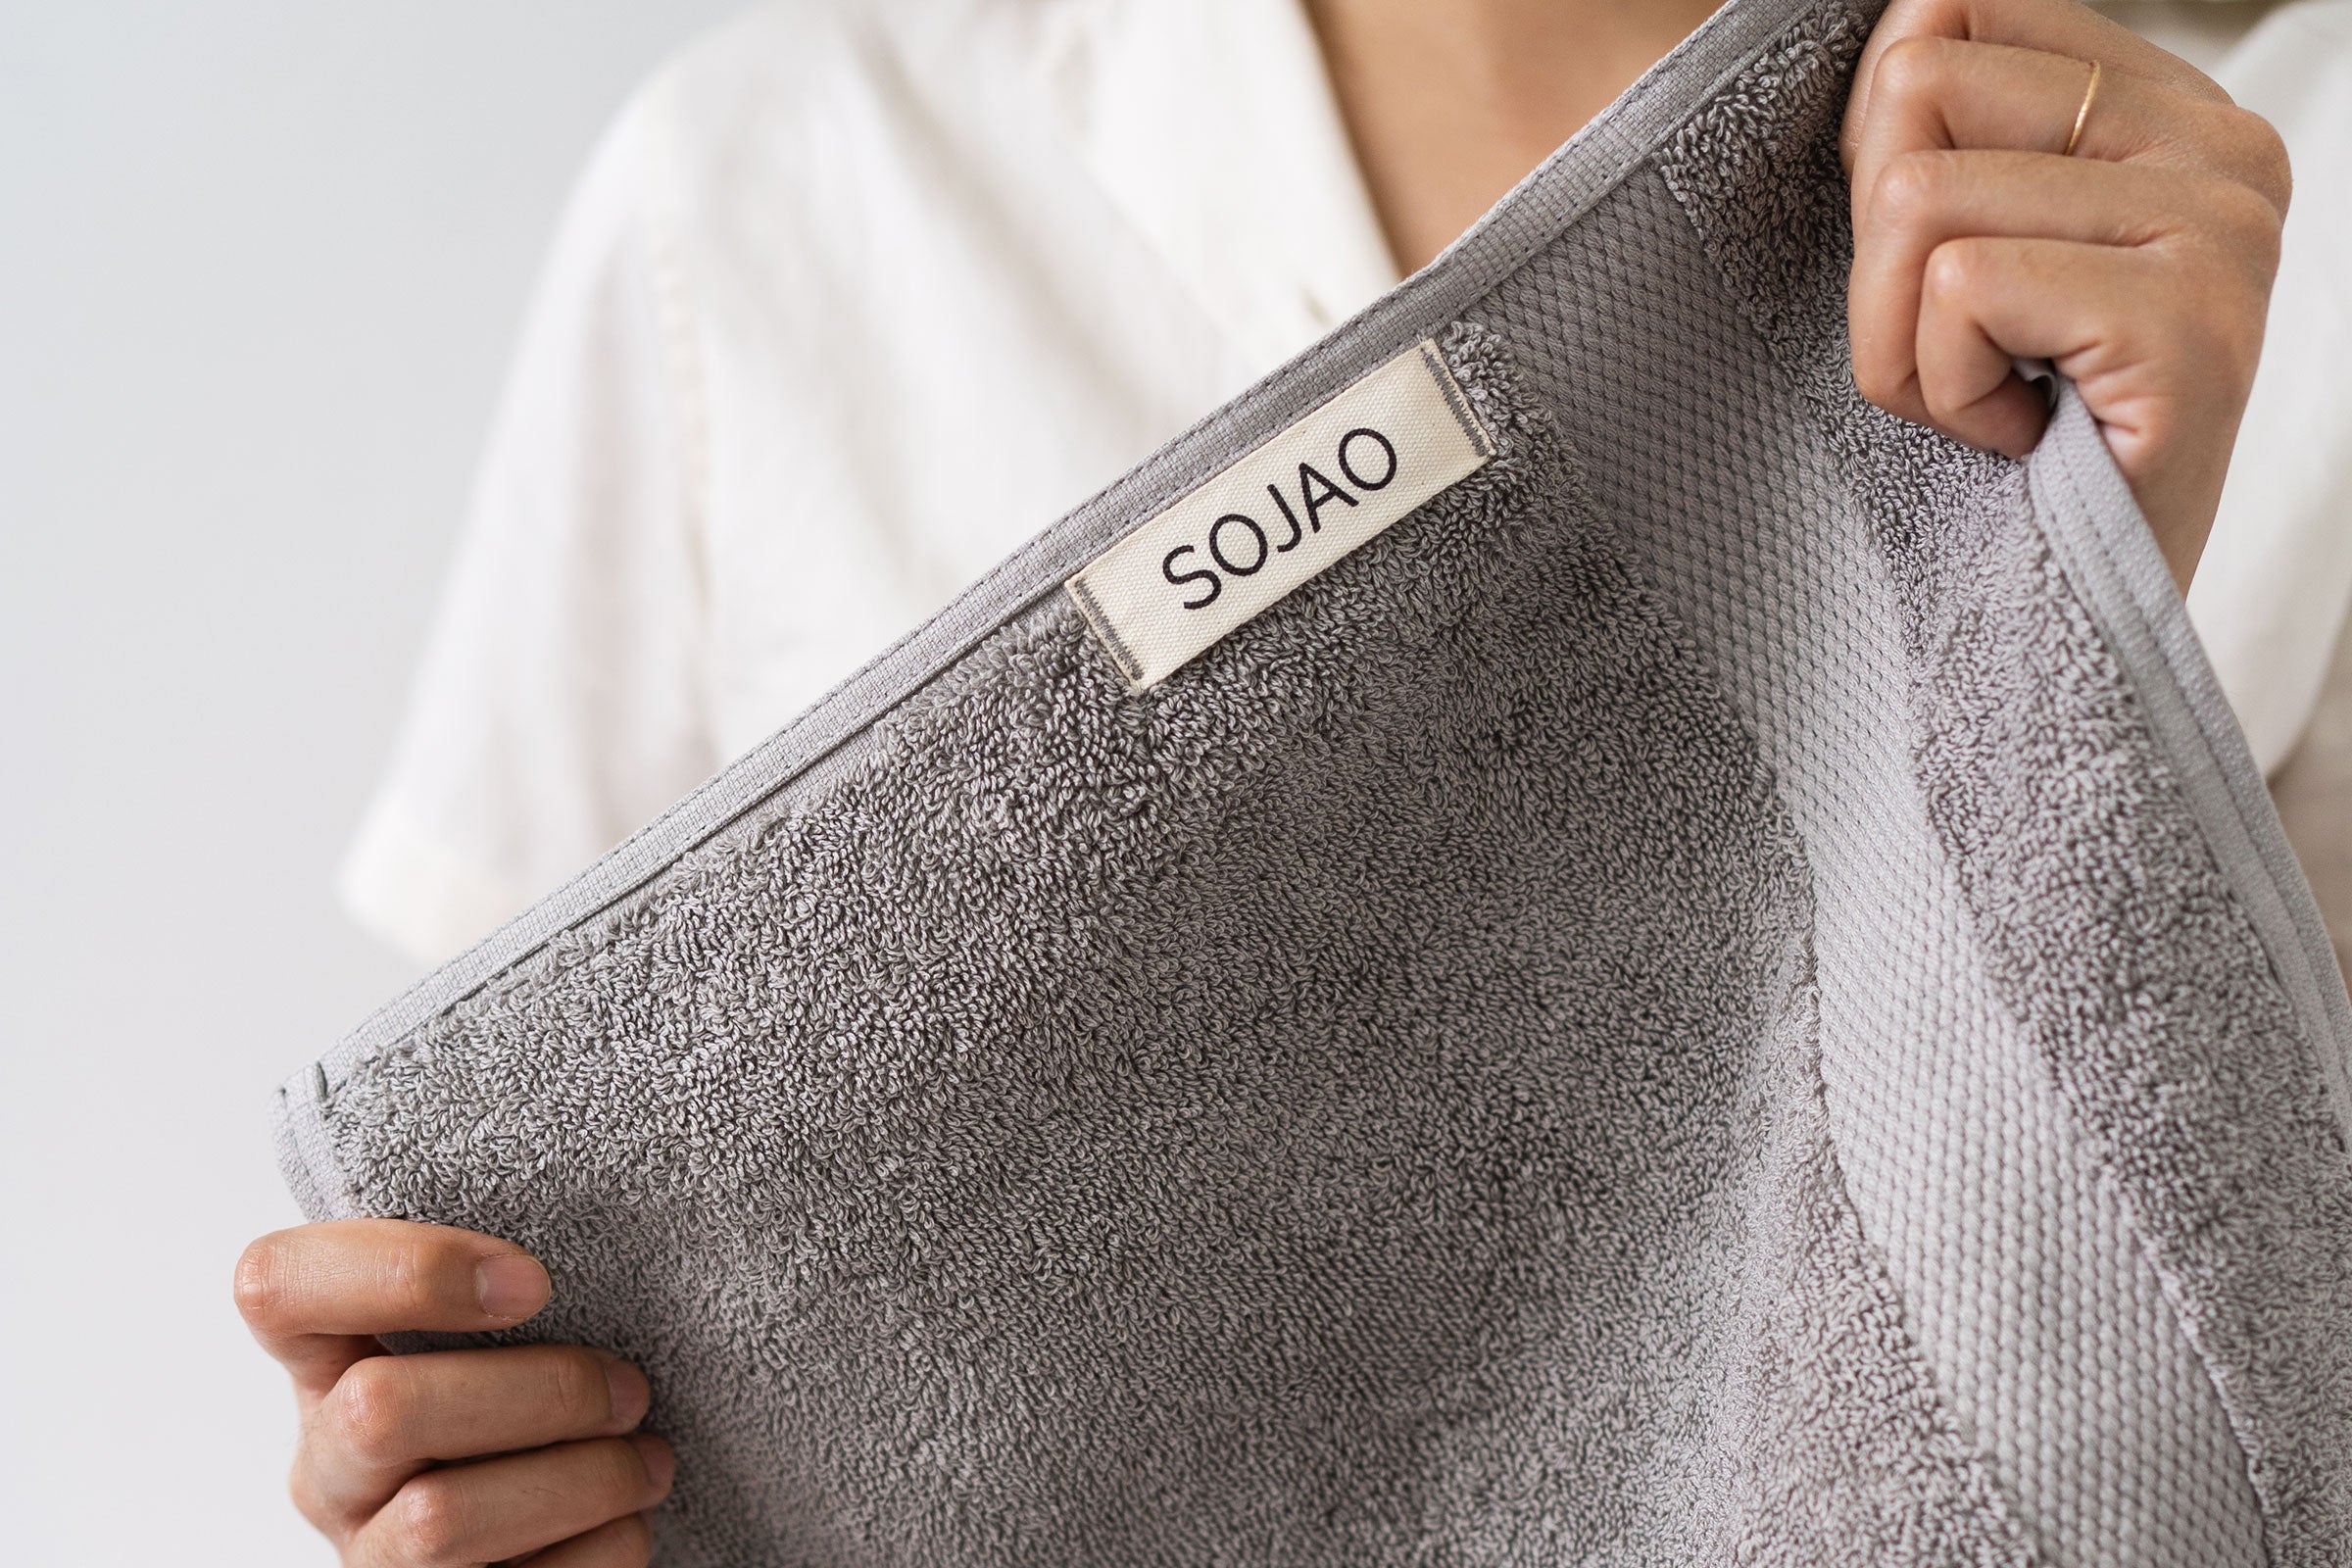 stone-organic-face-towel-pair-detail-shot-by-sojao.jpg